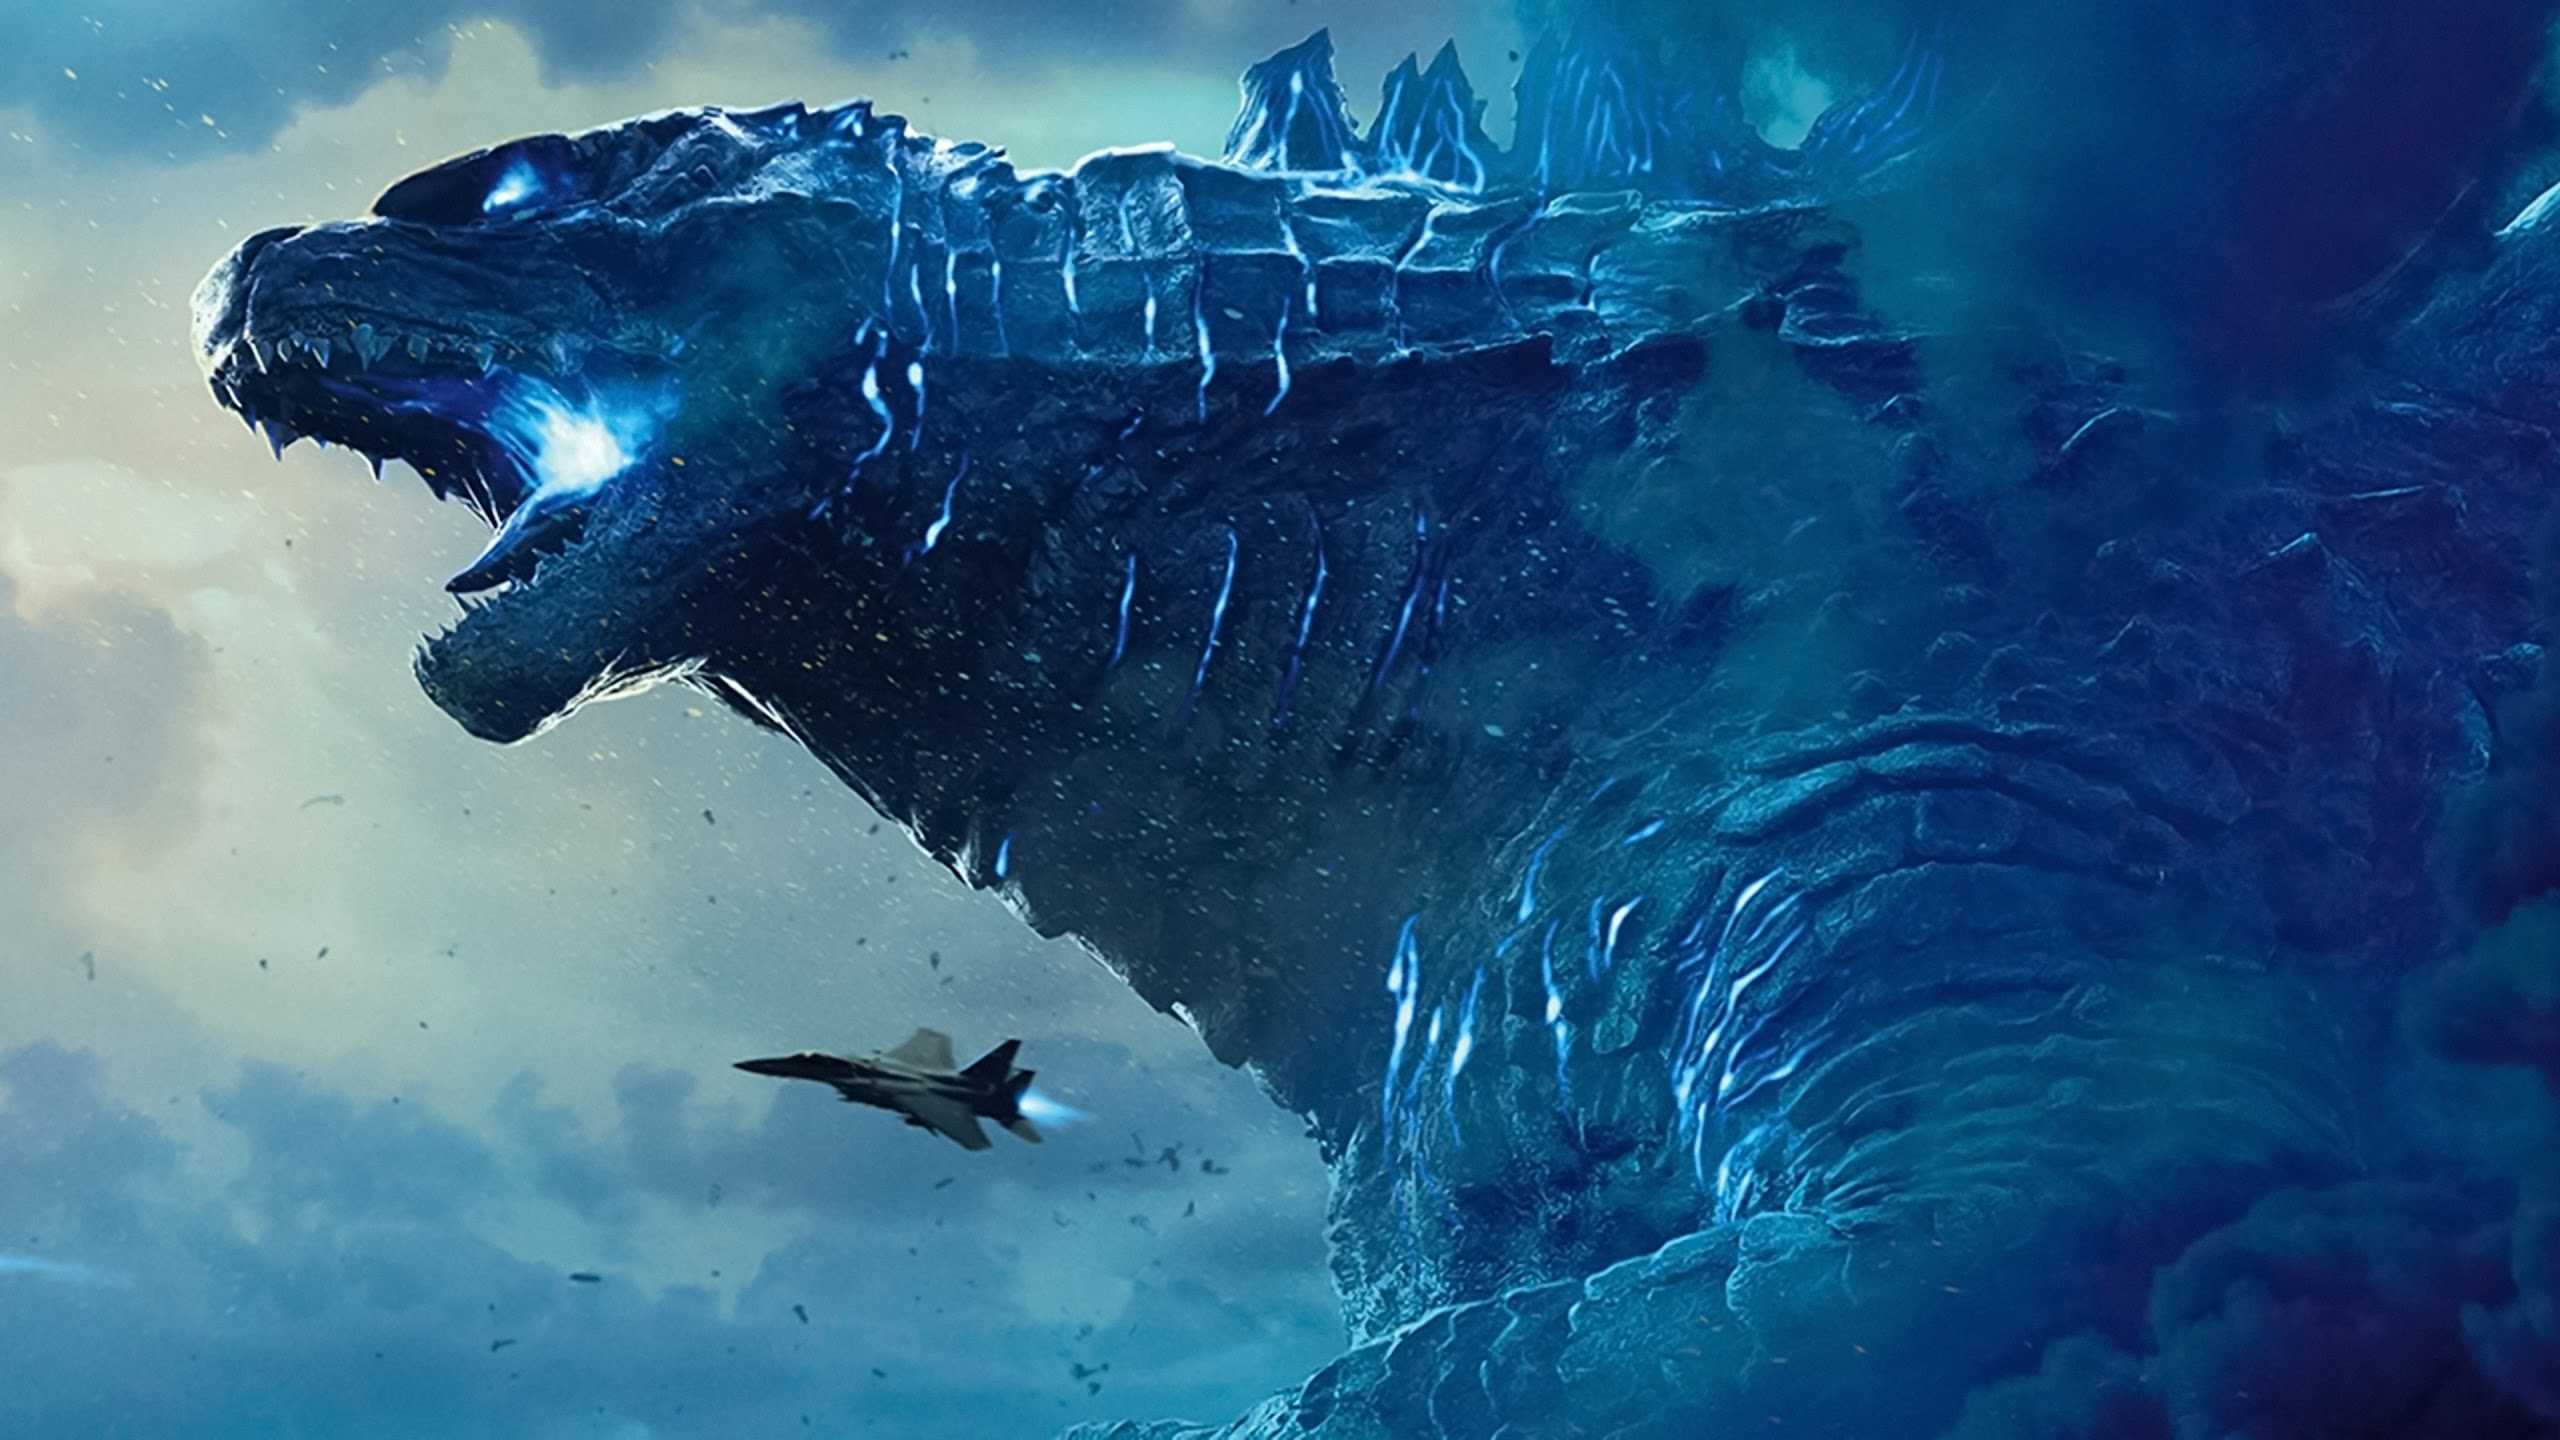 Godzilla Wallpaper - NawPic